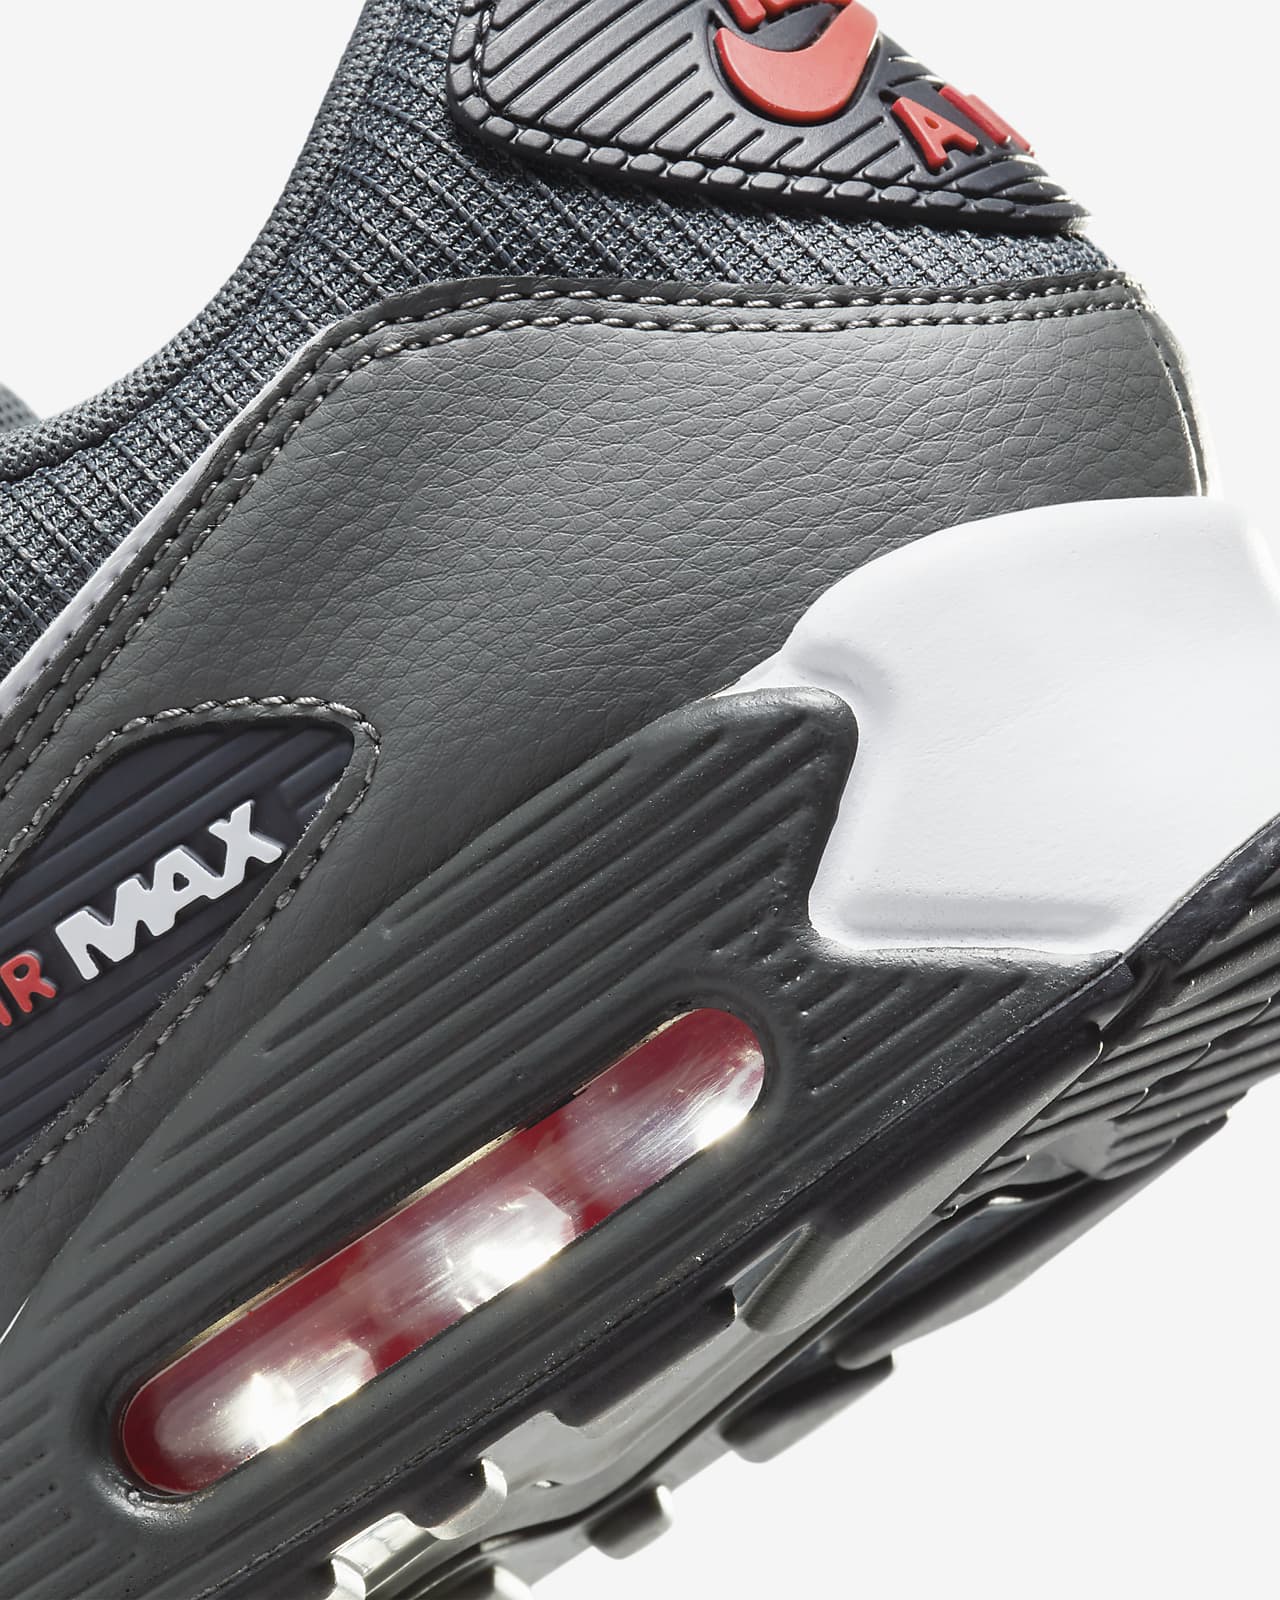 Chaussure Nike Air Max 90 pour homme - Gris